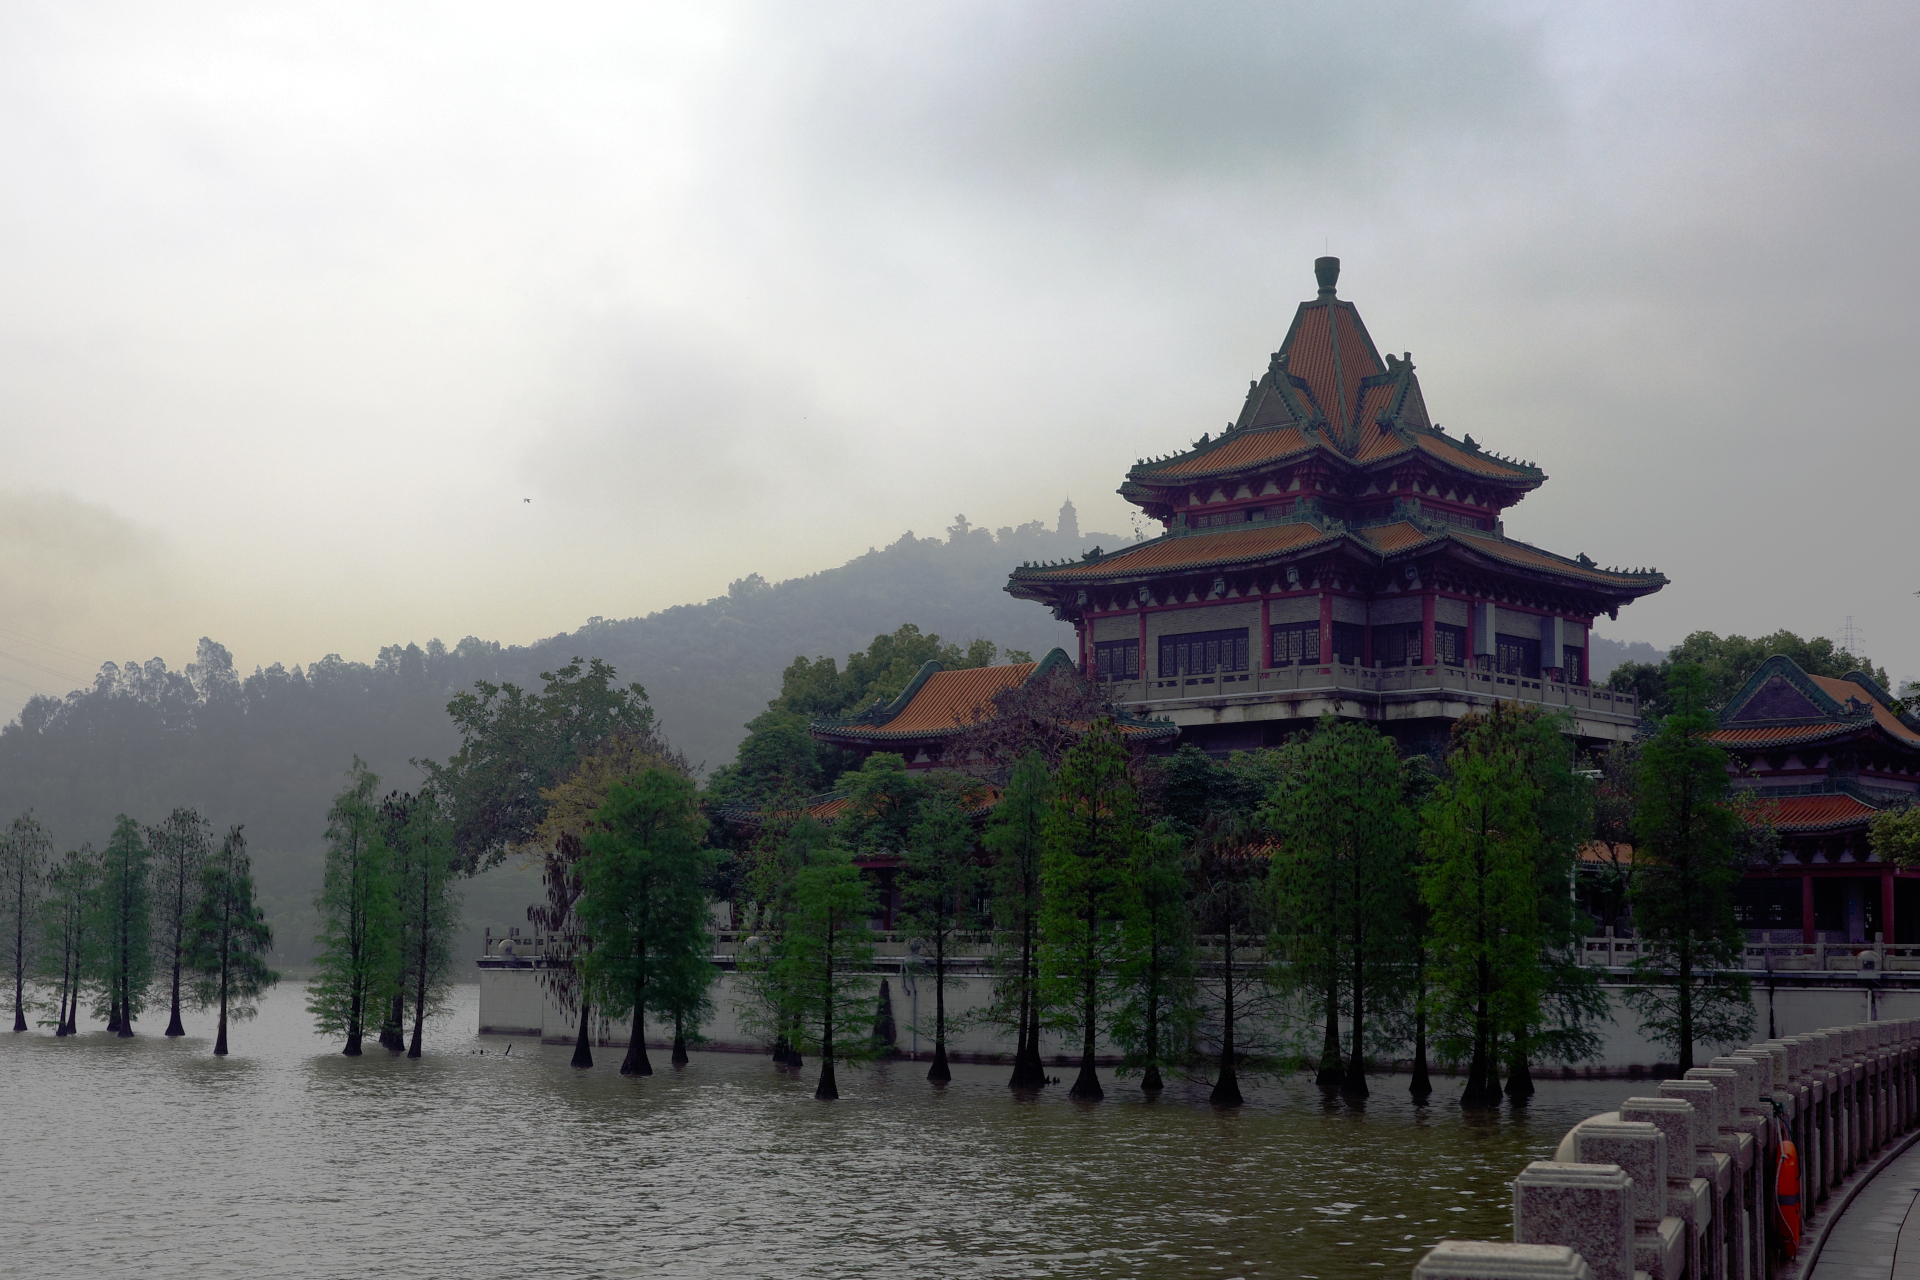 A temple near a lake